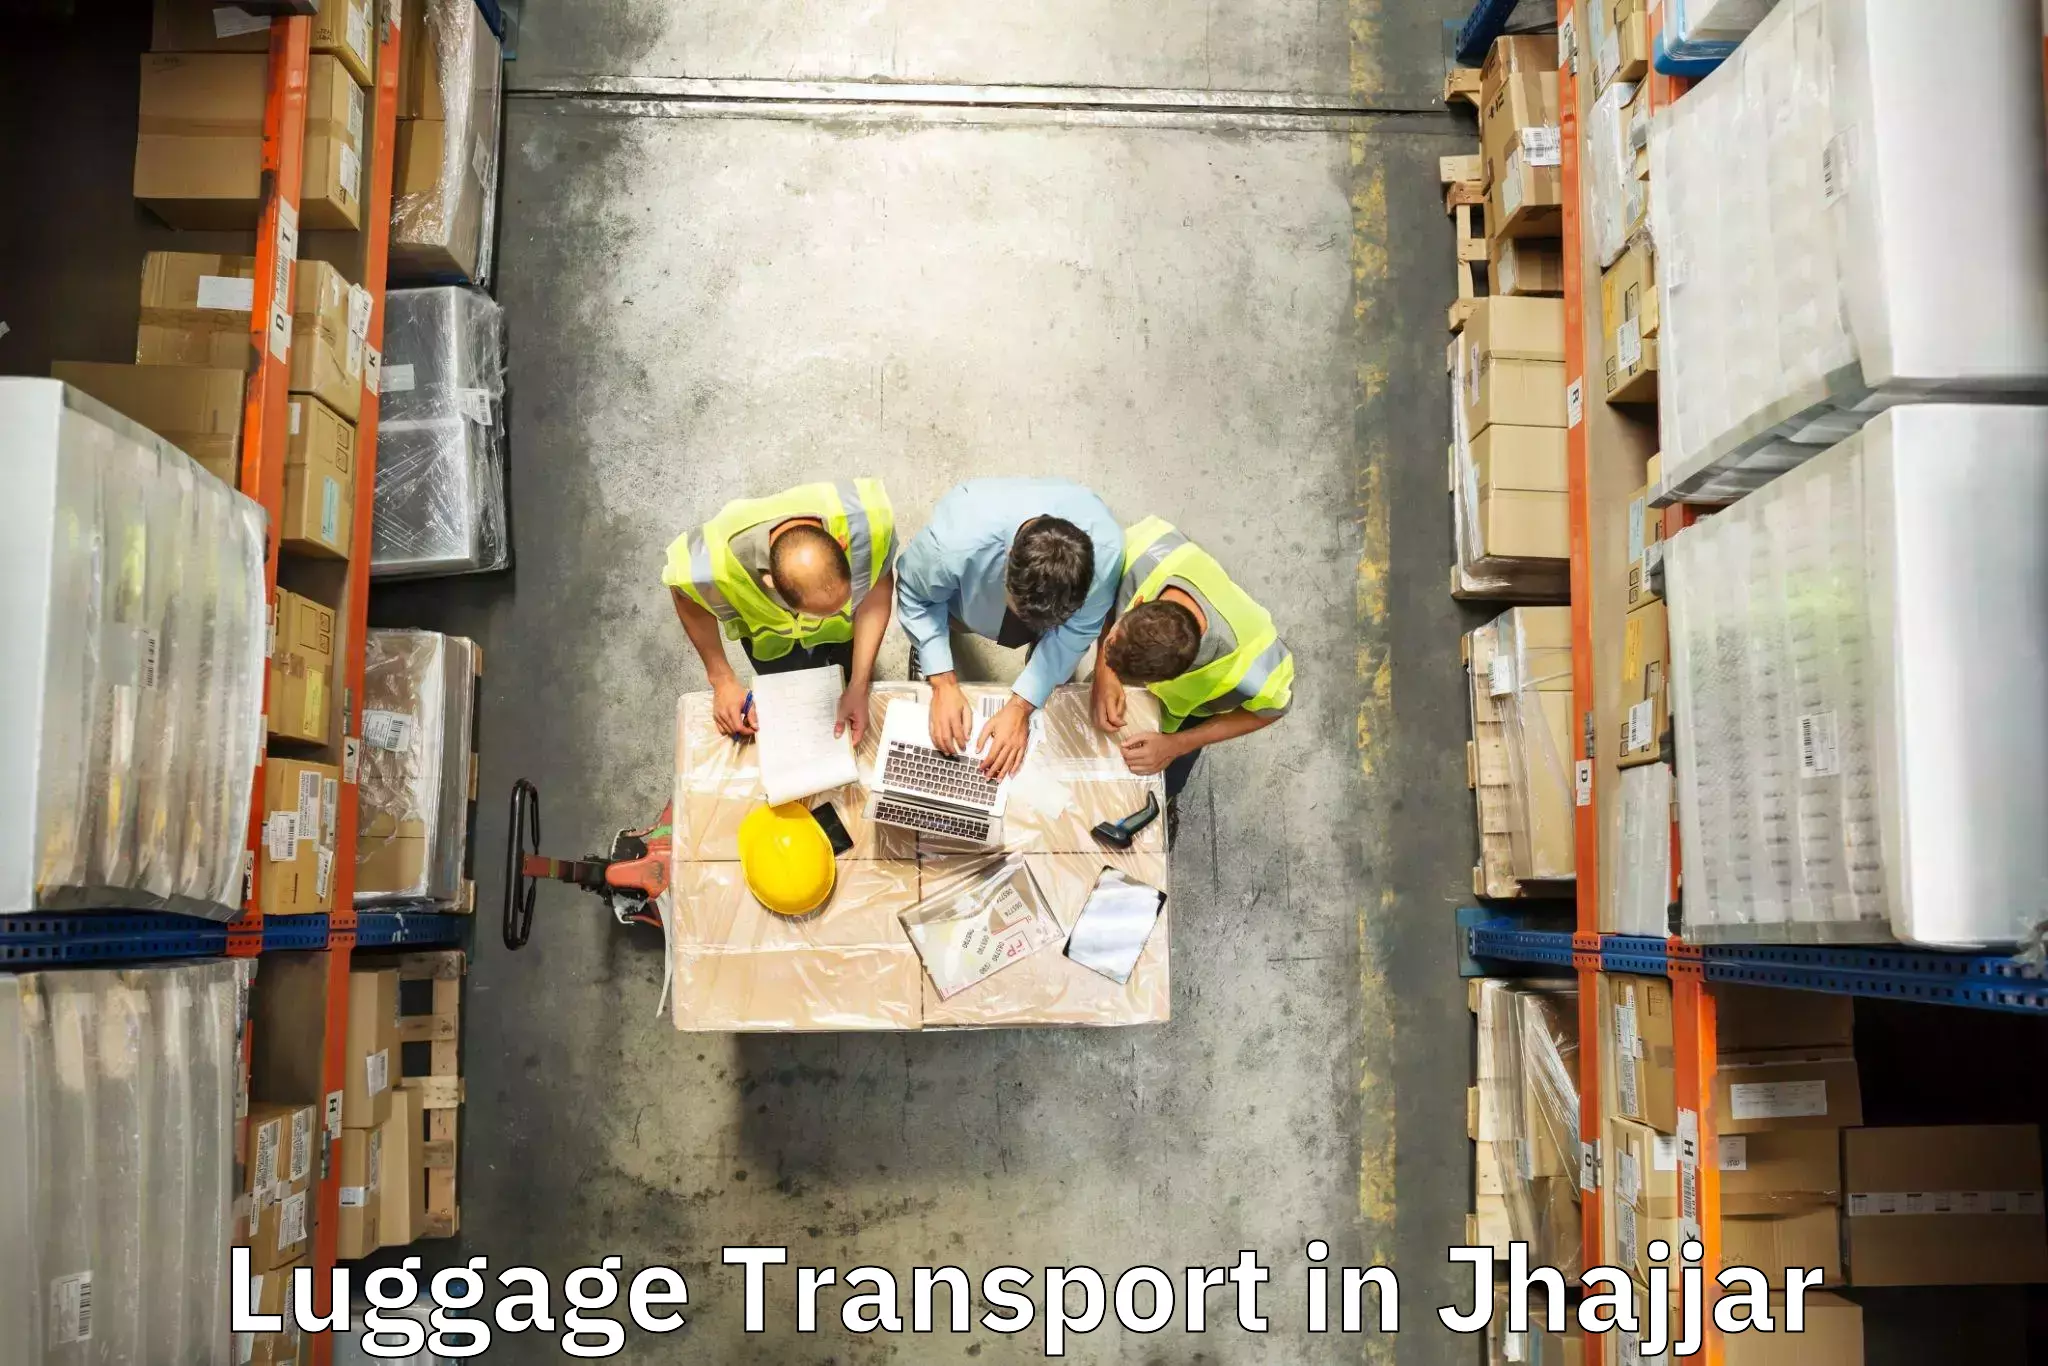 Luggage transport company in Jhajjar